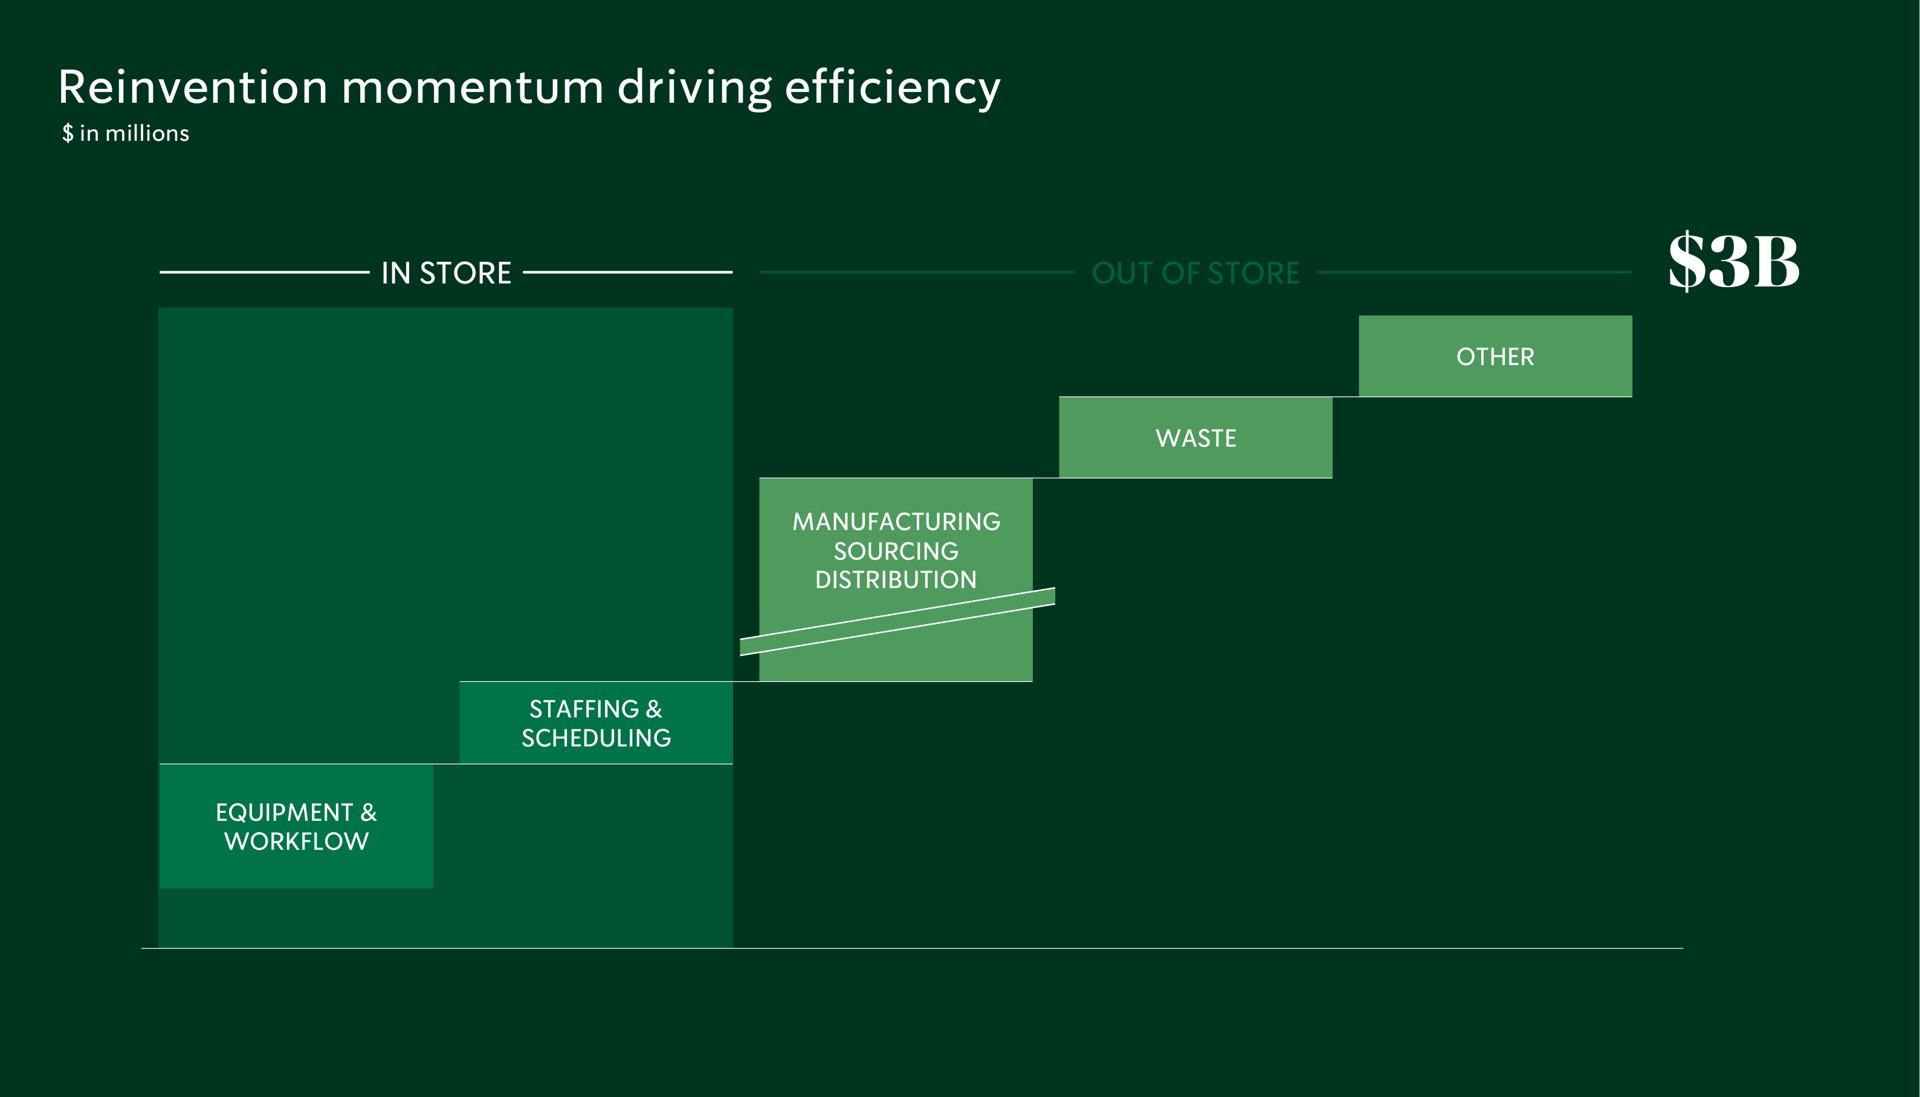 reinvention momentum driving efficiency | Starbucks